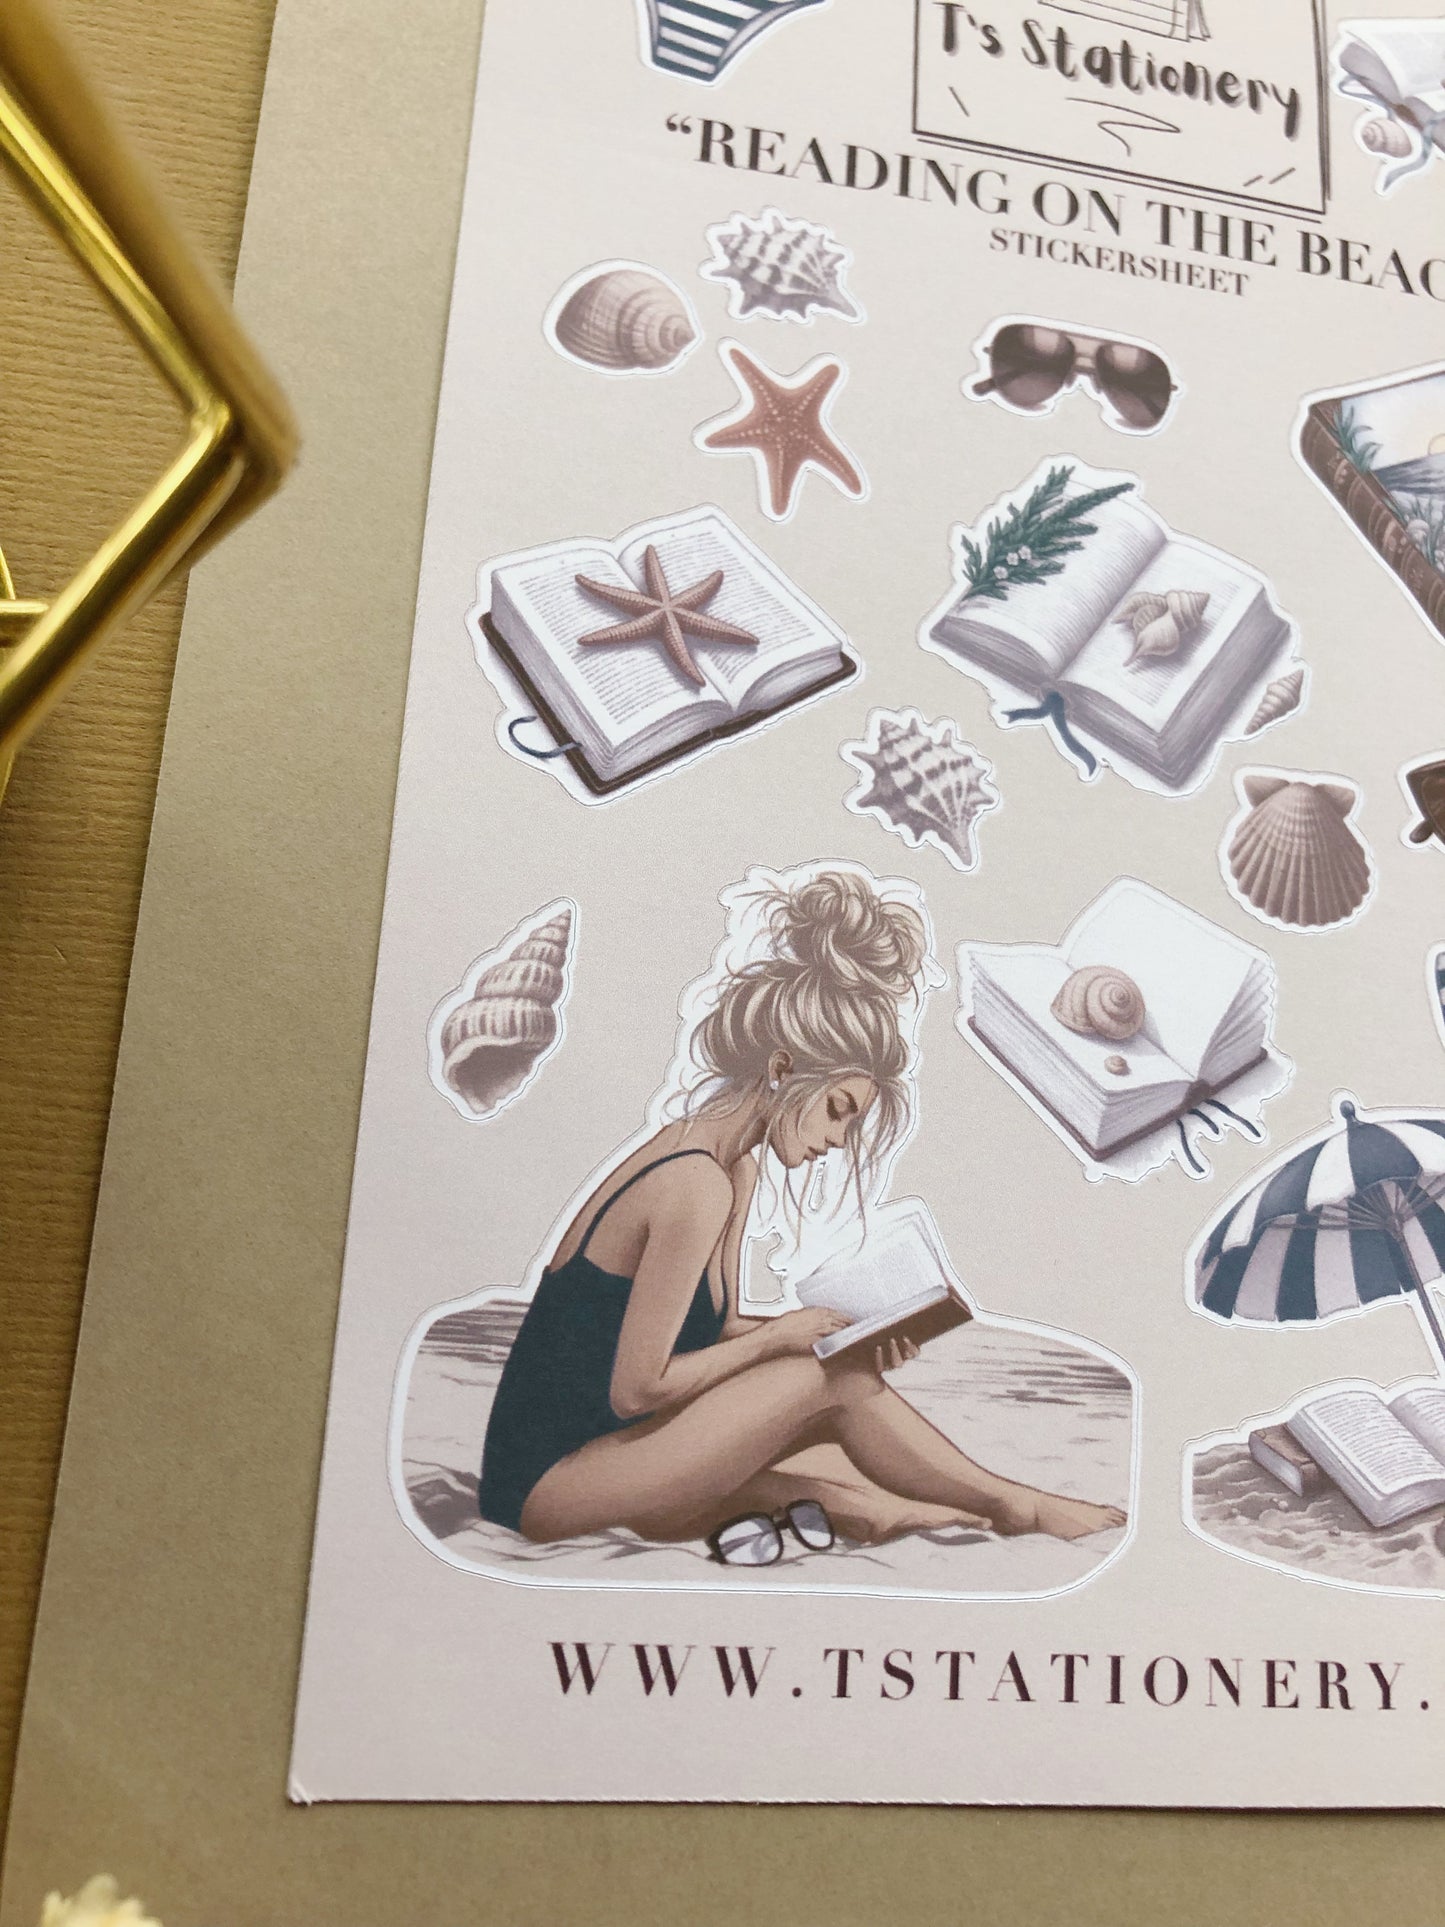 “Reading On The Beach" Sticker Sheet